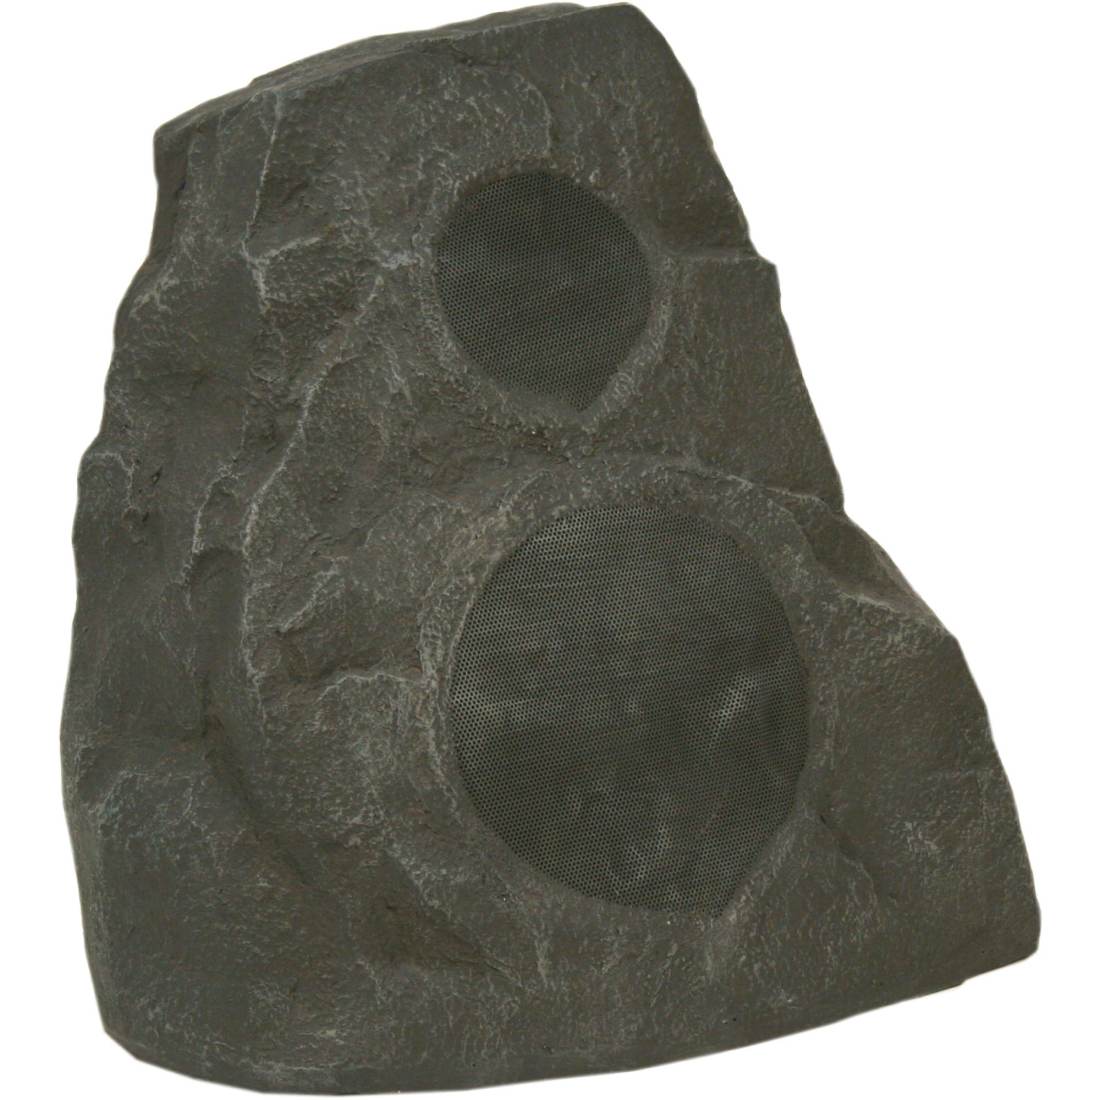 Klipsch AWR-650-SM 6.5" Outdoor Rock Speaker – Each - Granite